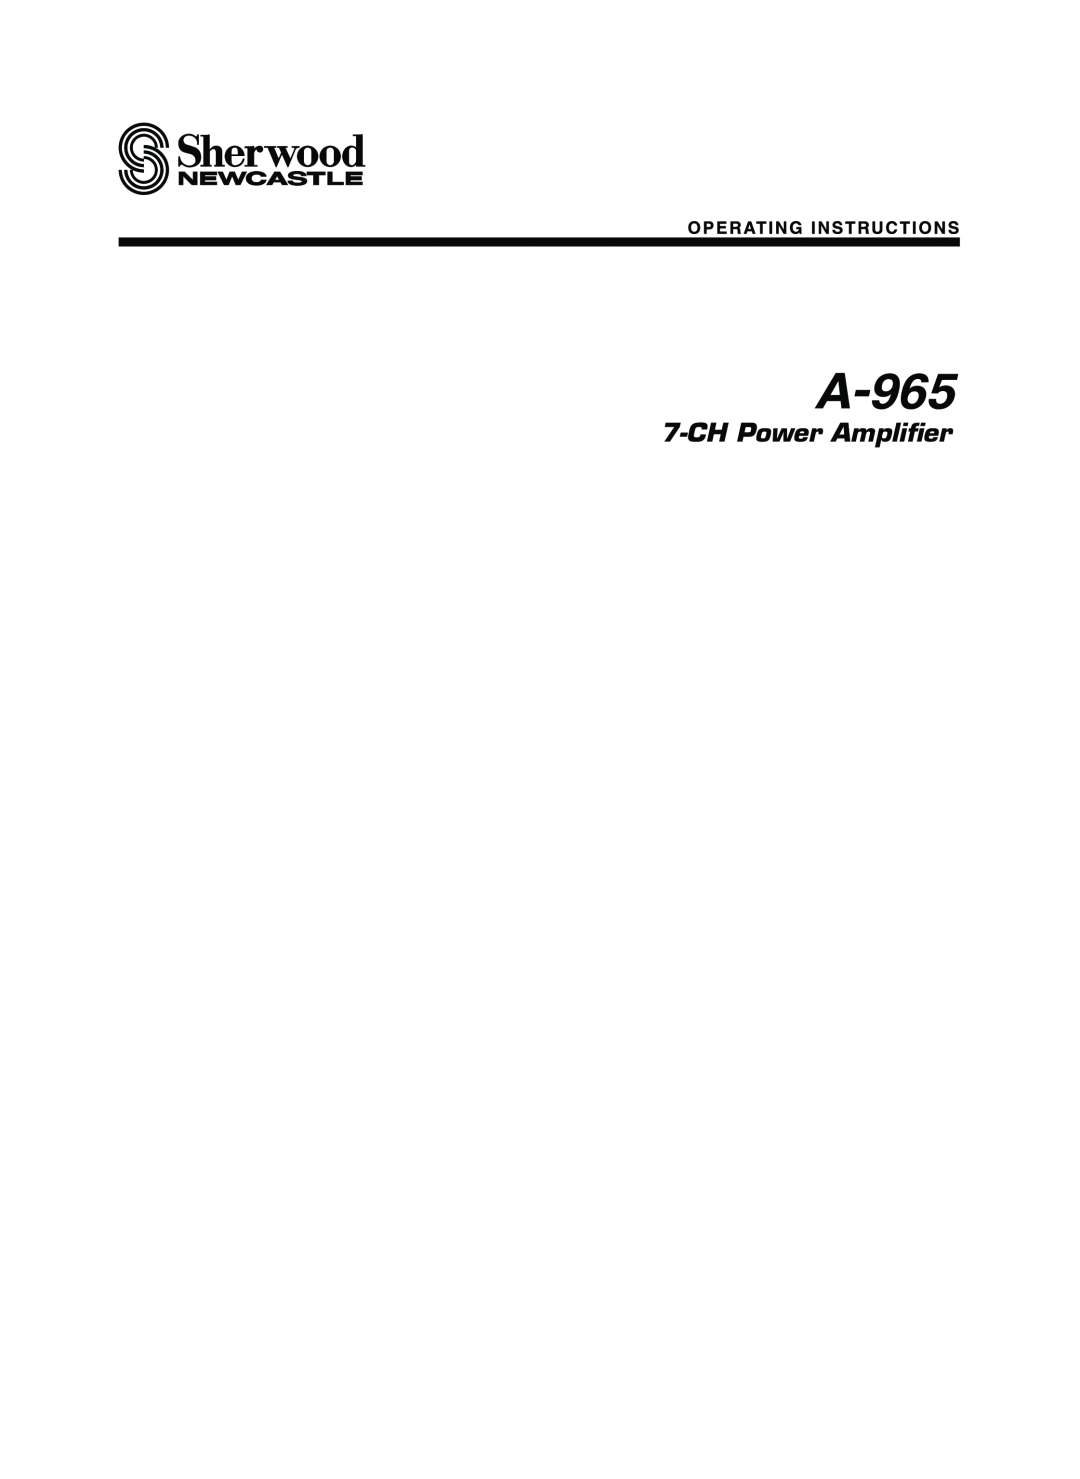 Sherwood A-965 manual CH Power Amplifier 